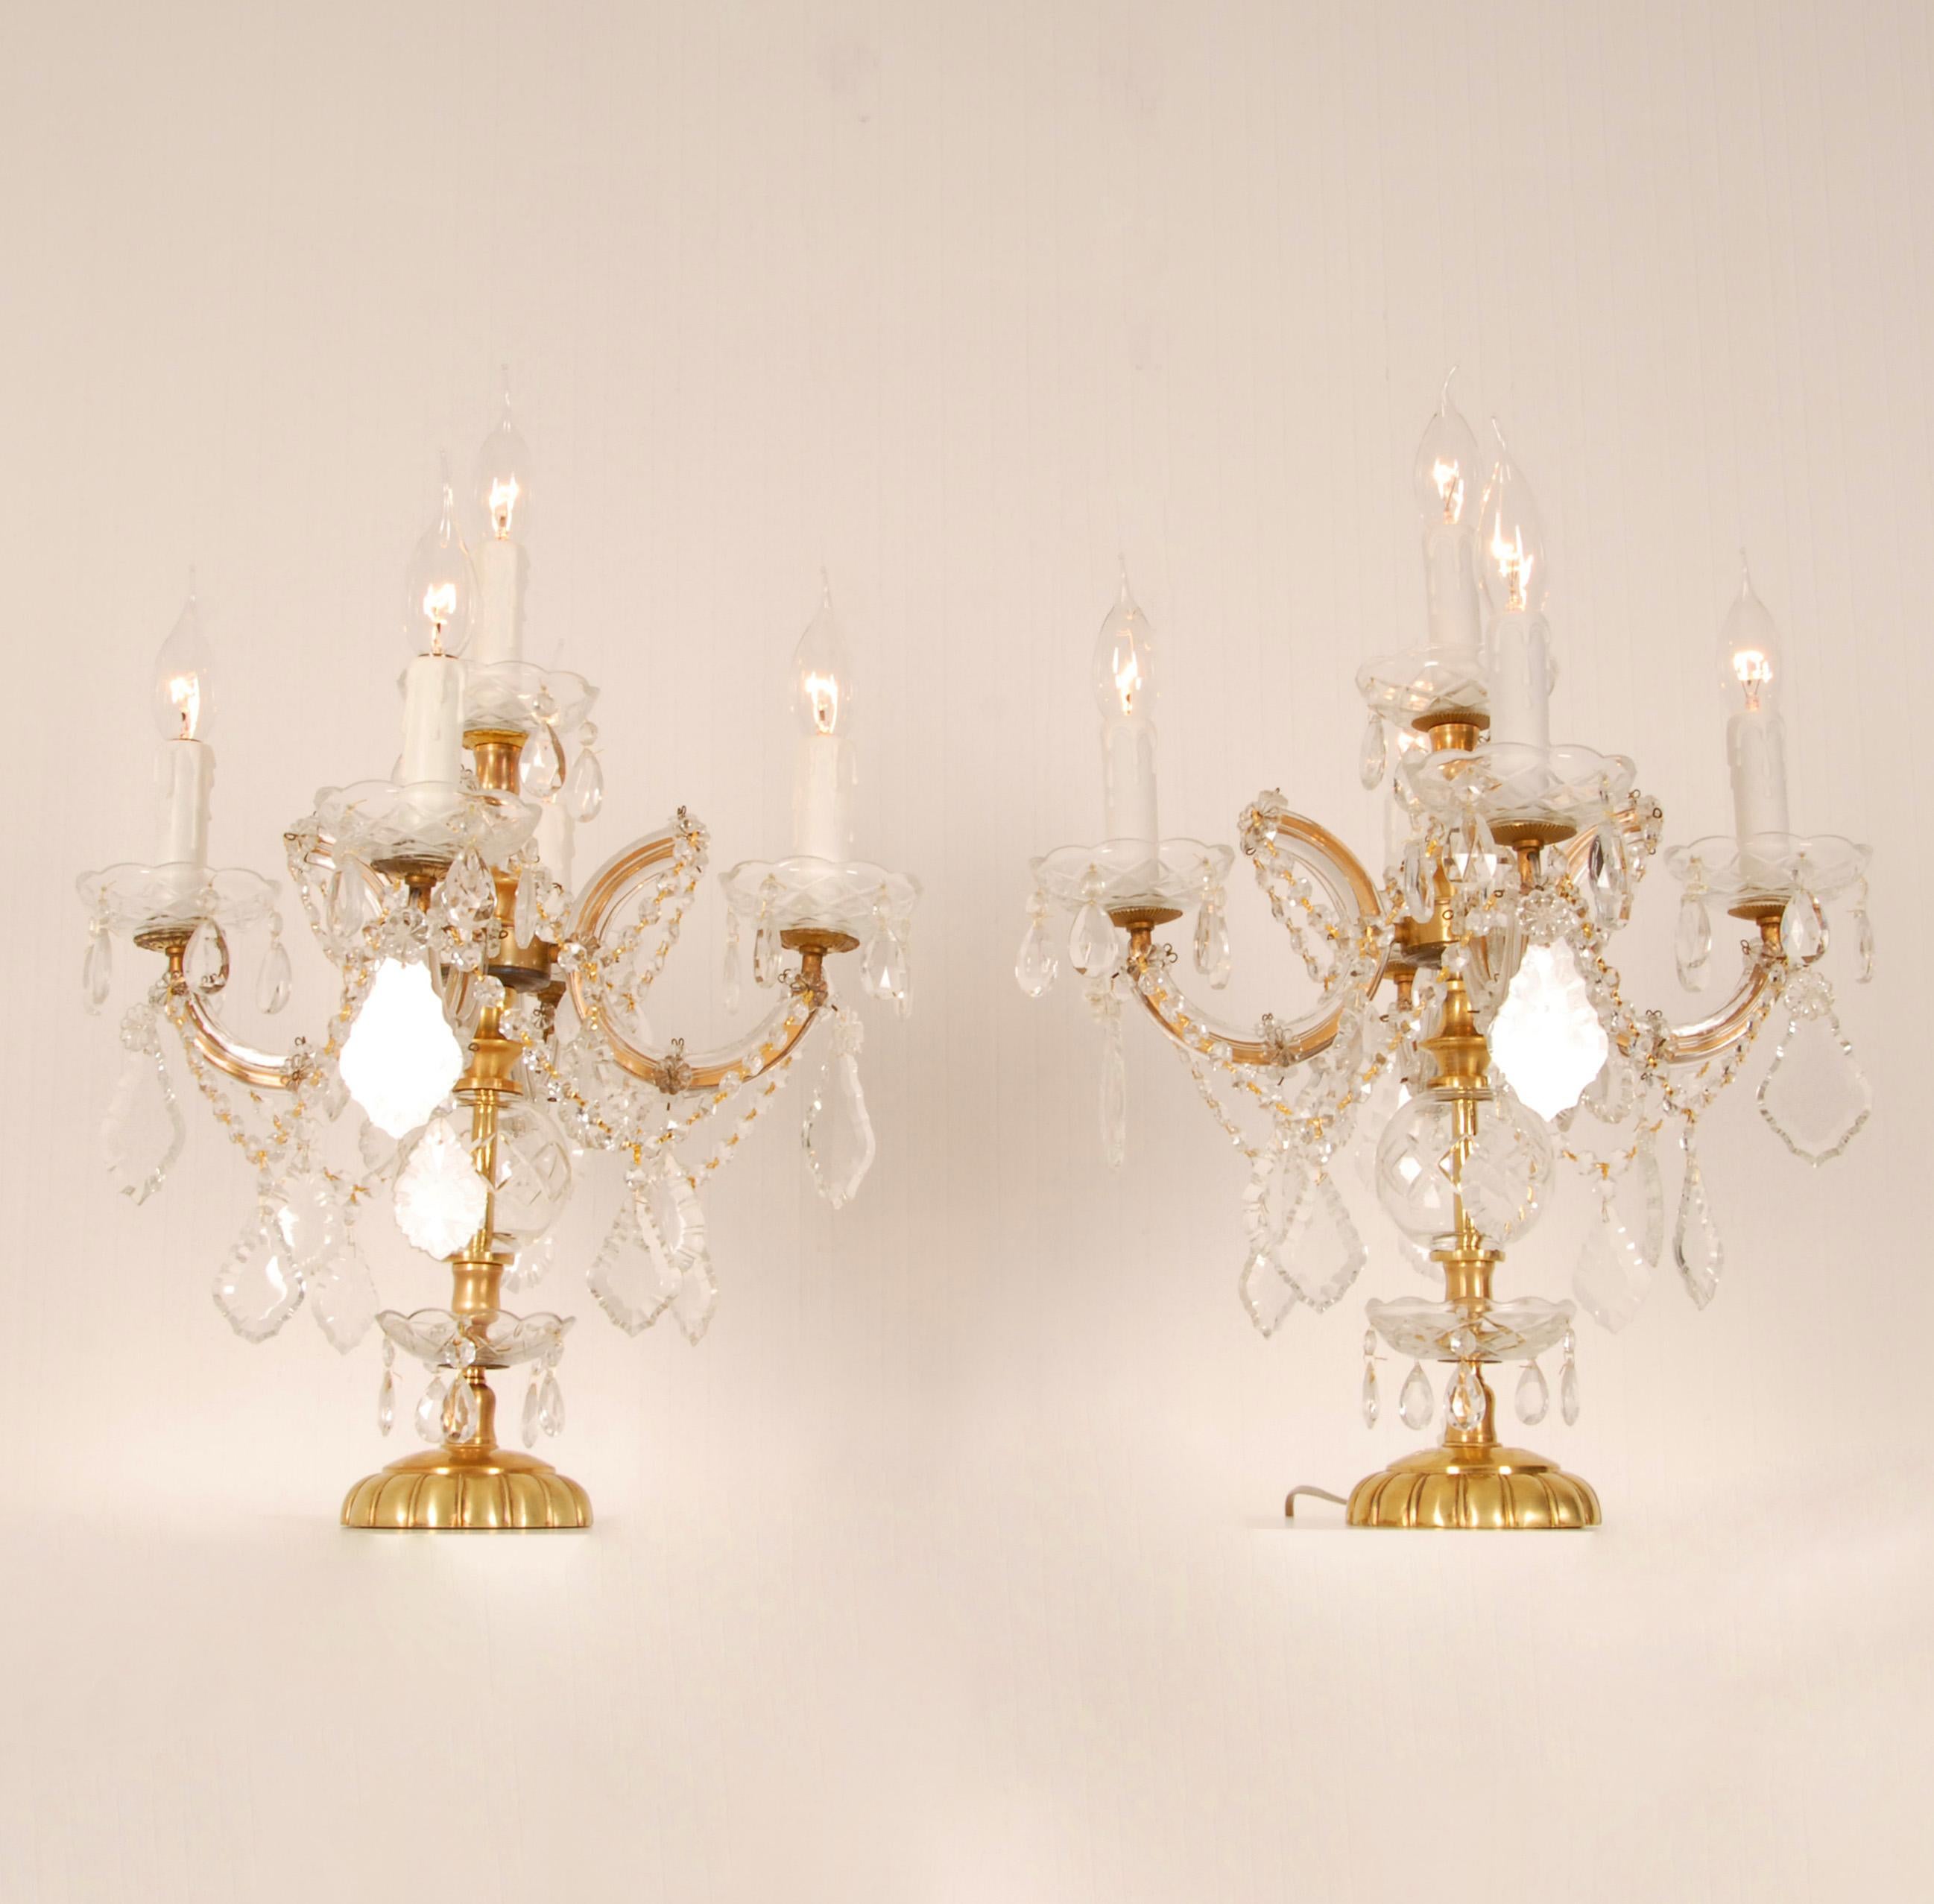 Kristall-Tischlampen von Marie Therese, vergoldetes Messing, Paar (Barock)